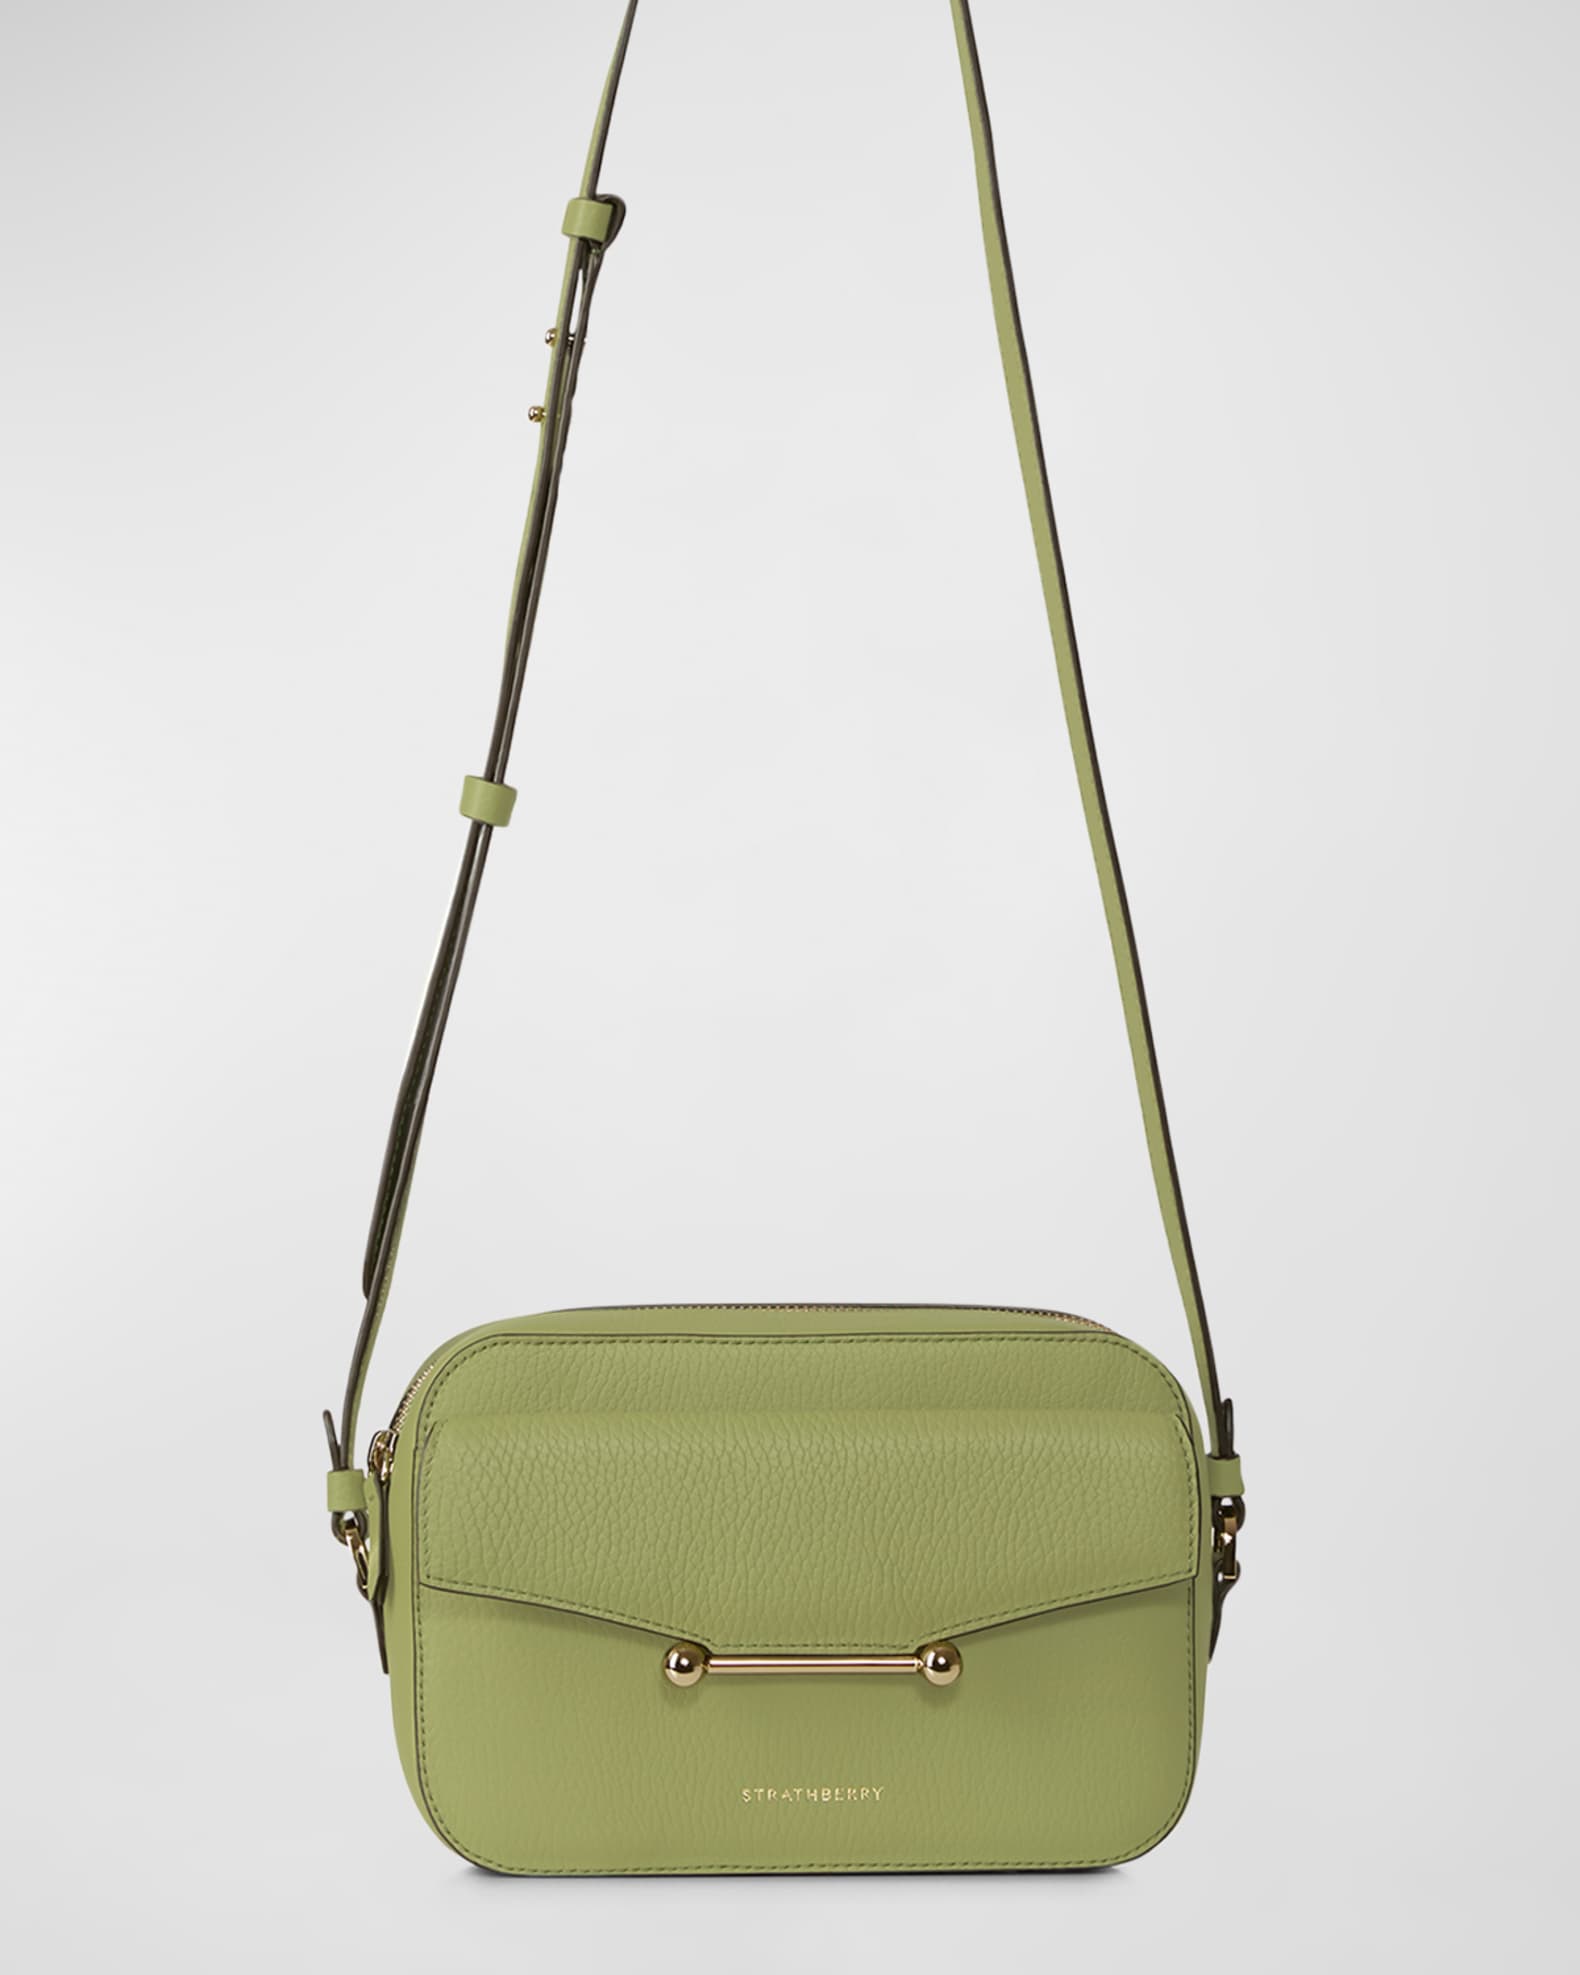 Help me choose Strathberry : r/handbags